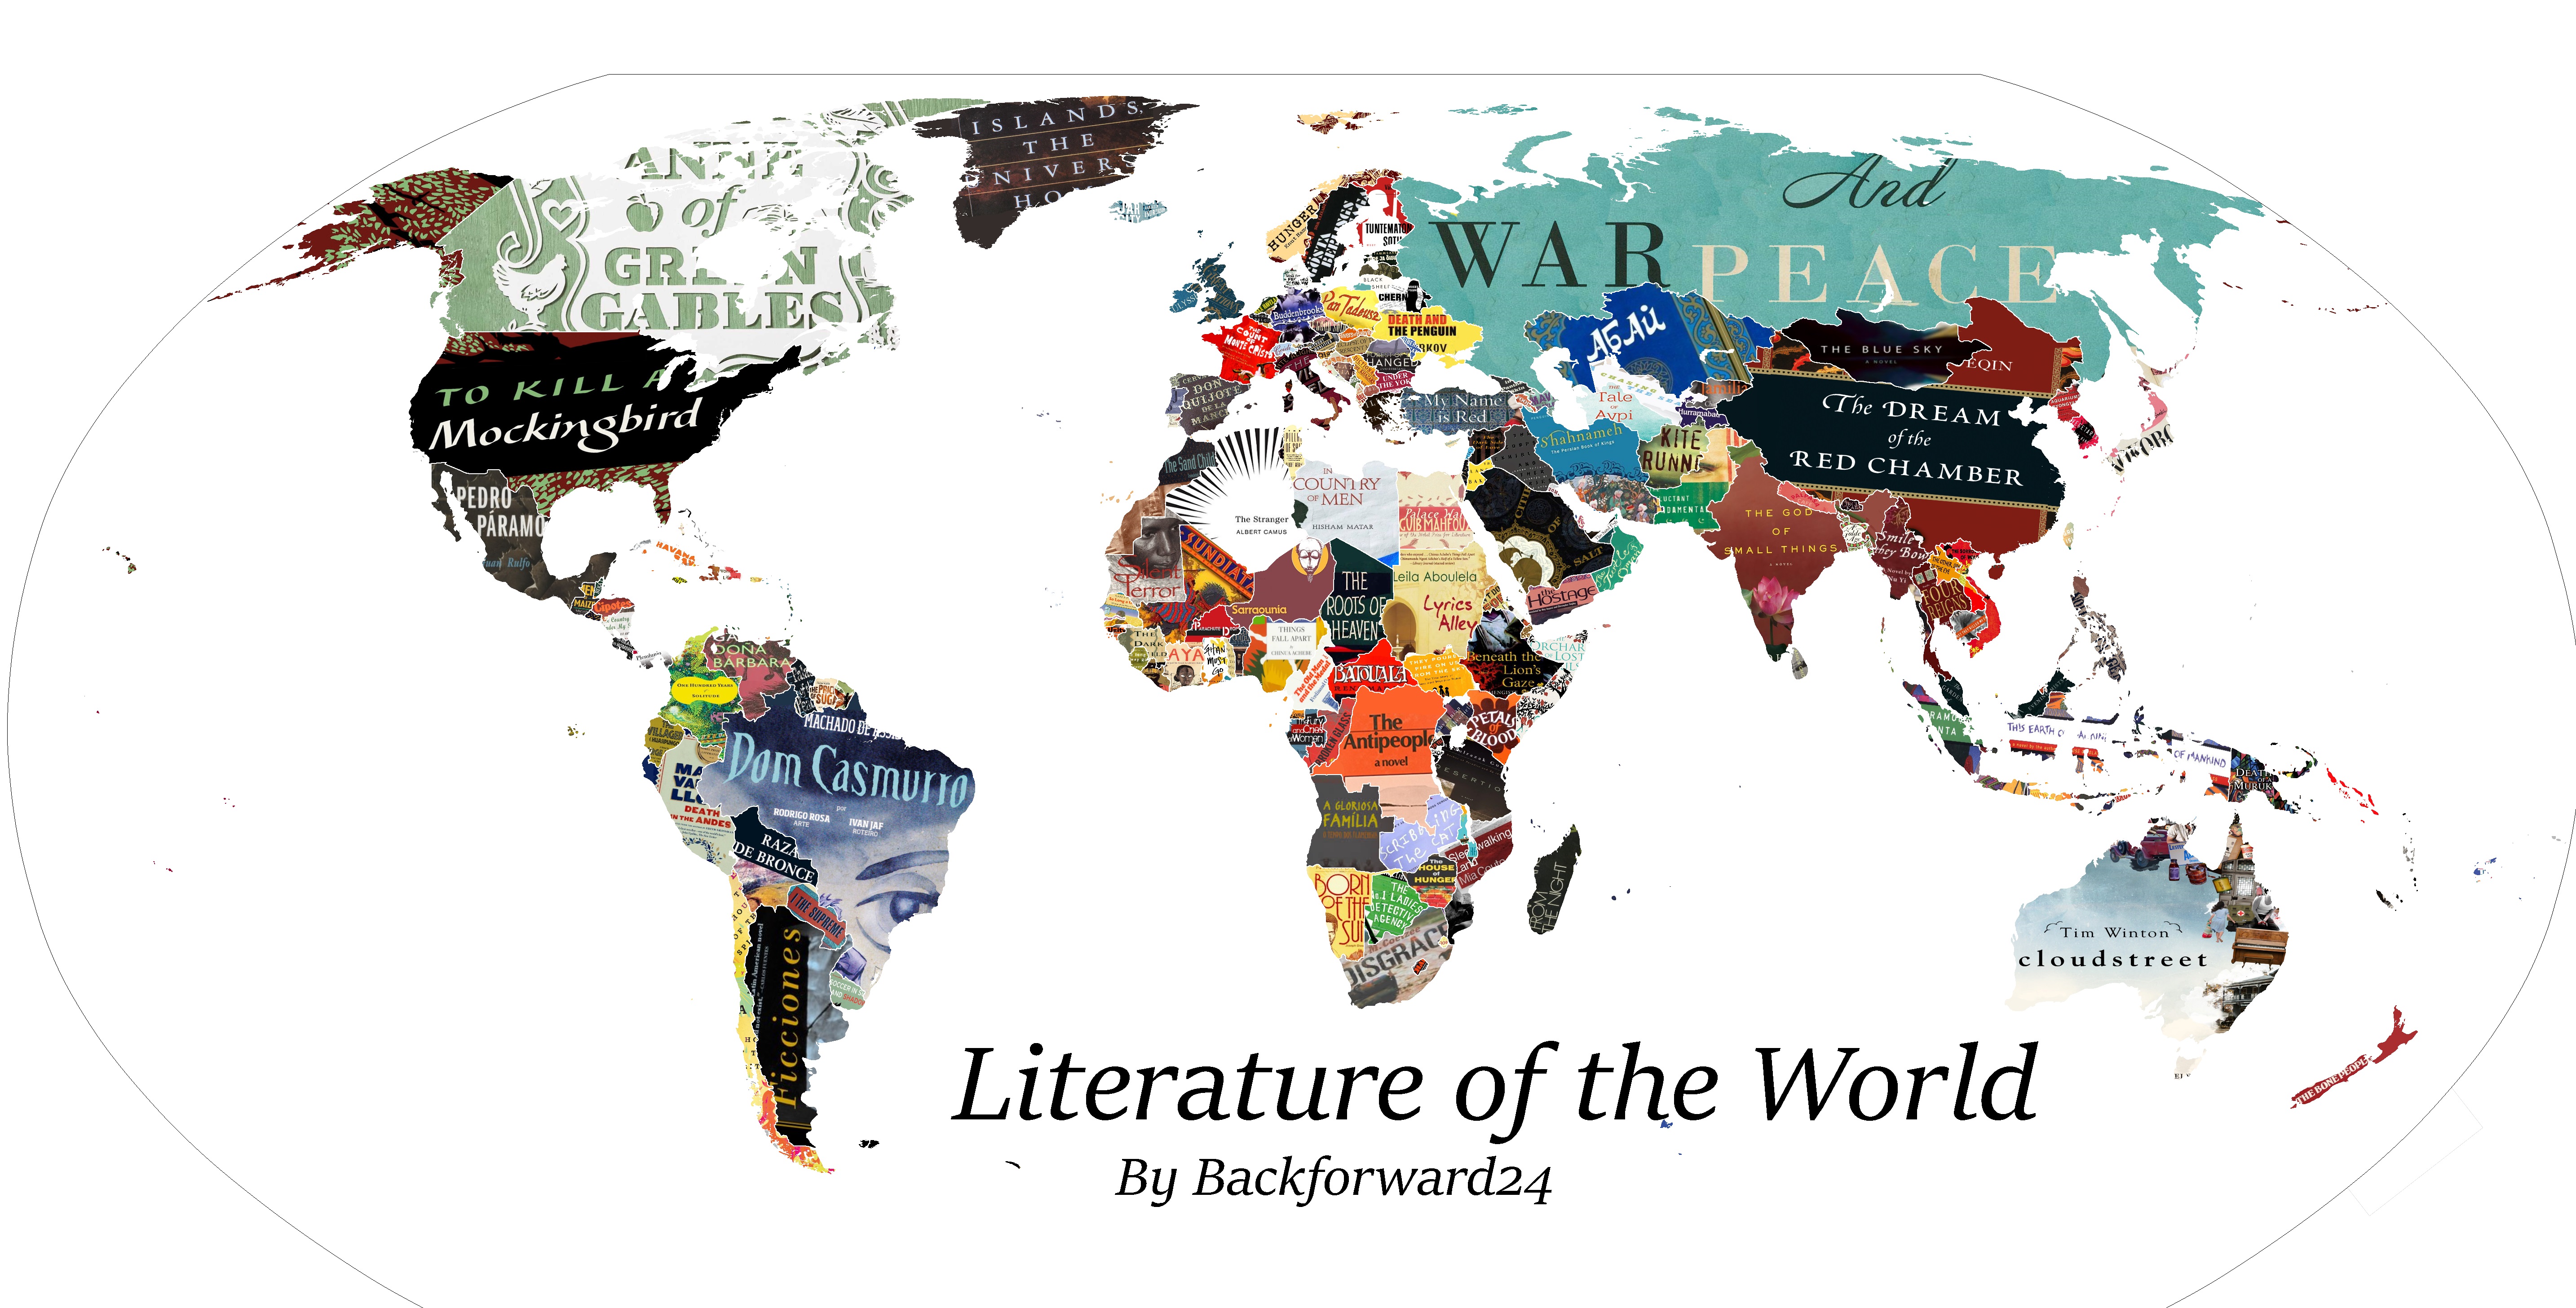 Зі світу по книзі: опублікована літературна карта Землі - фото